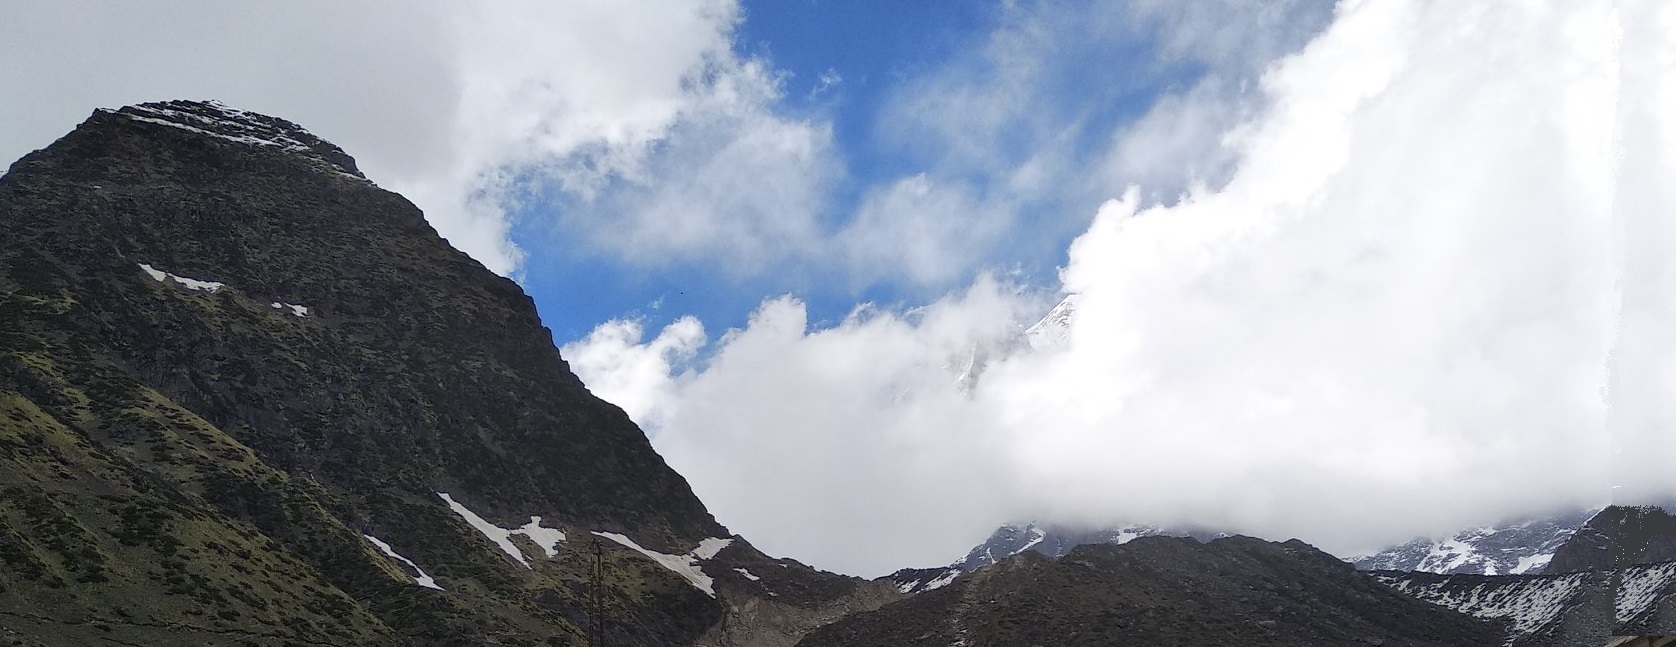 Dainkund Peak Dalhousie Tour, Himachal Pradesh